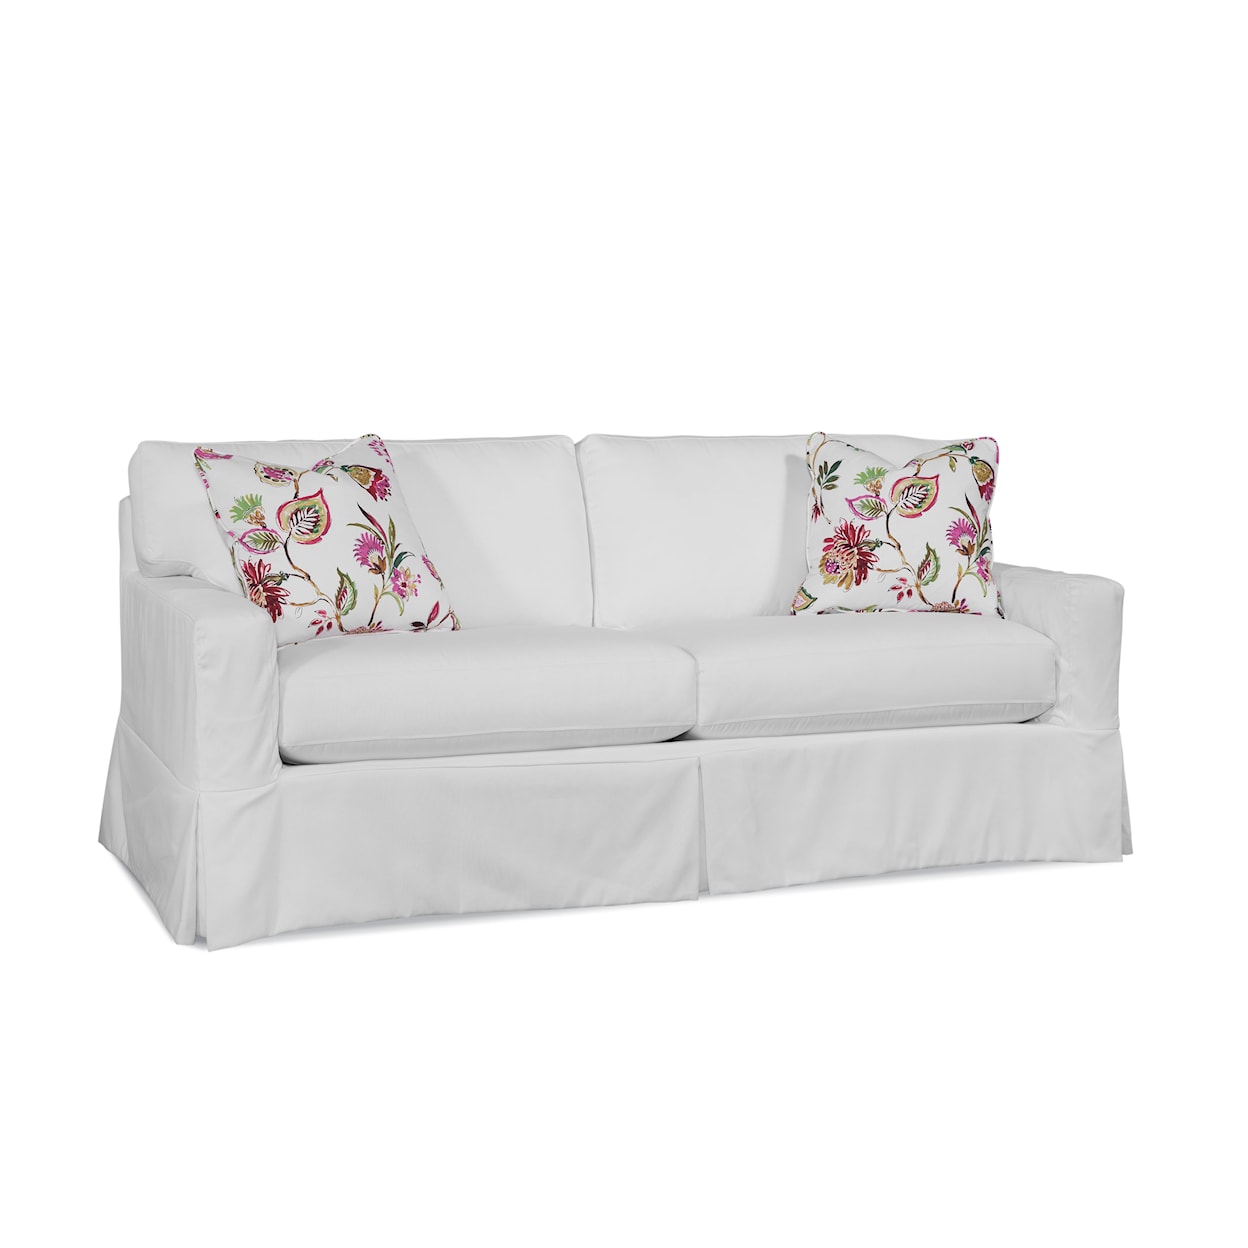 Braxton Culler Gramercy Park Gramercy Park Loft Sofa with Slipcover